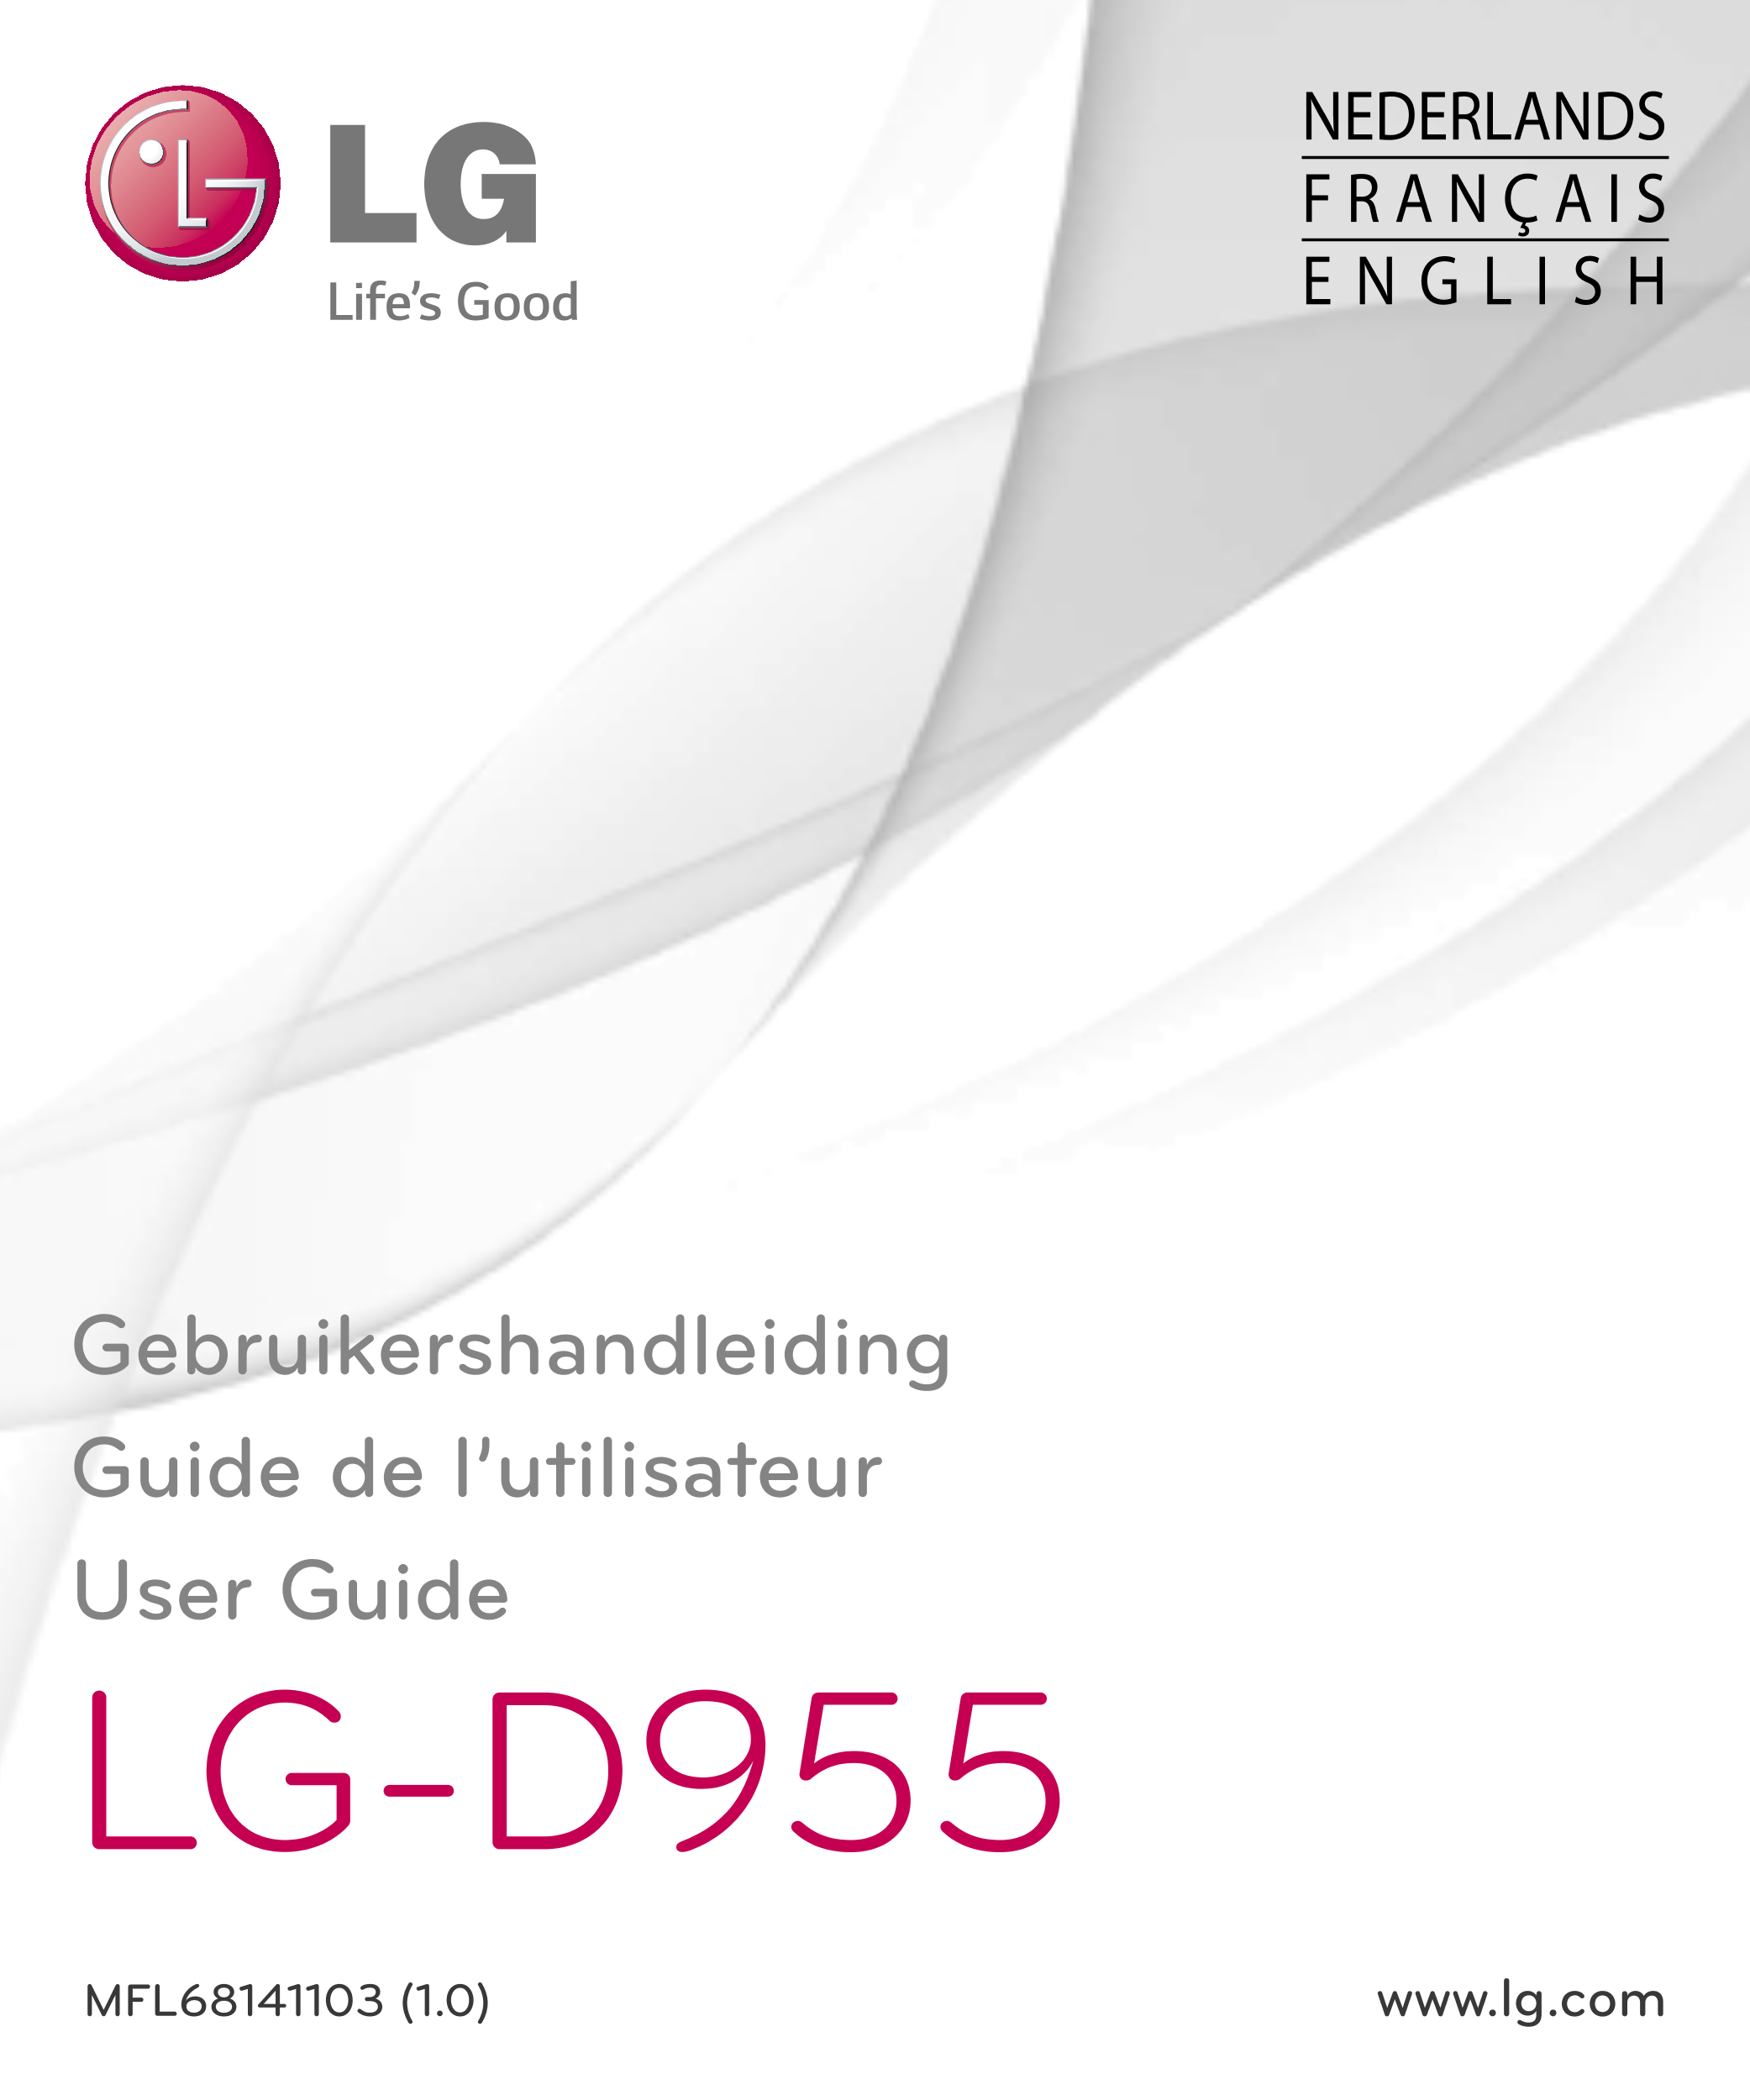 NEDERLANDS
F R A N Ç A I S
E N G L I S H
Gebruikershandleiding
Guide de l’utilisateur
User Guide
LG-D955
MFL68141103 (1.0)  www.